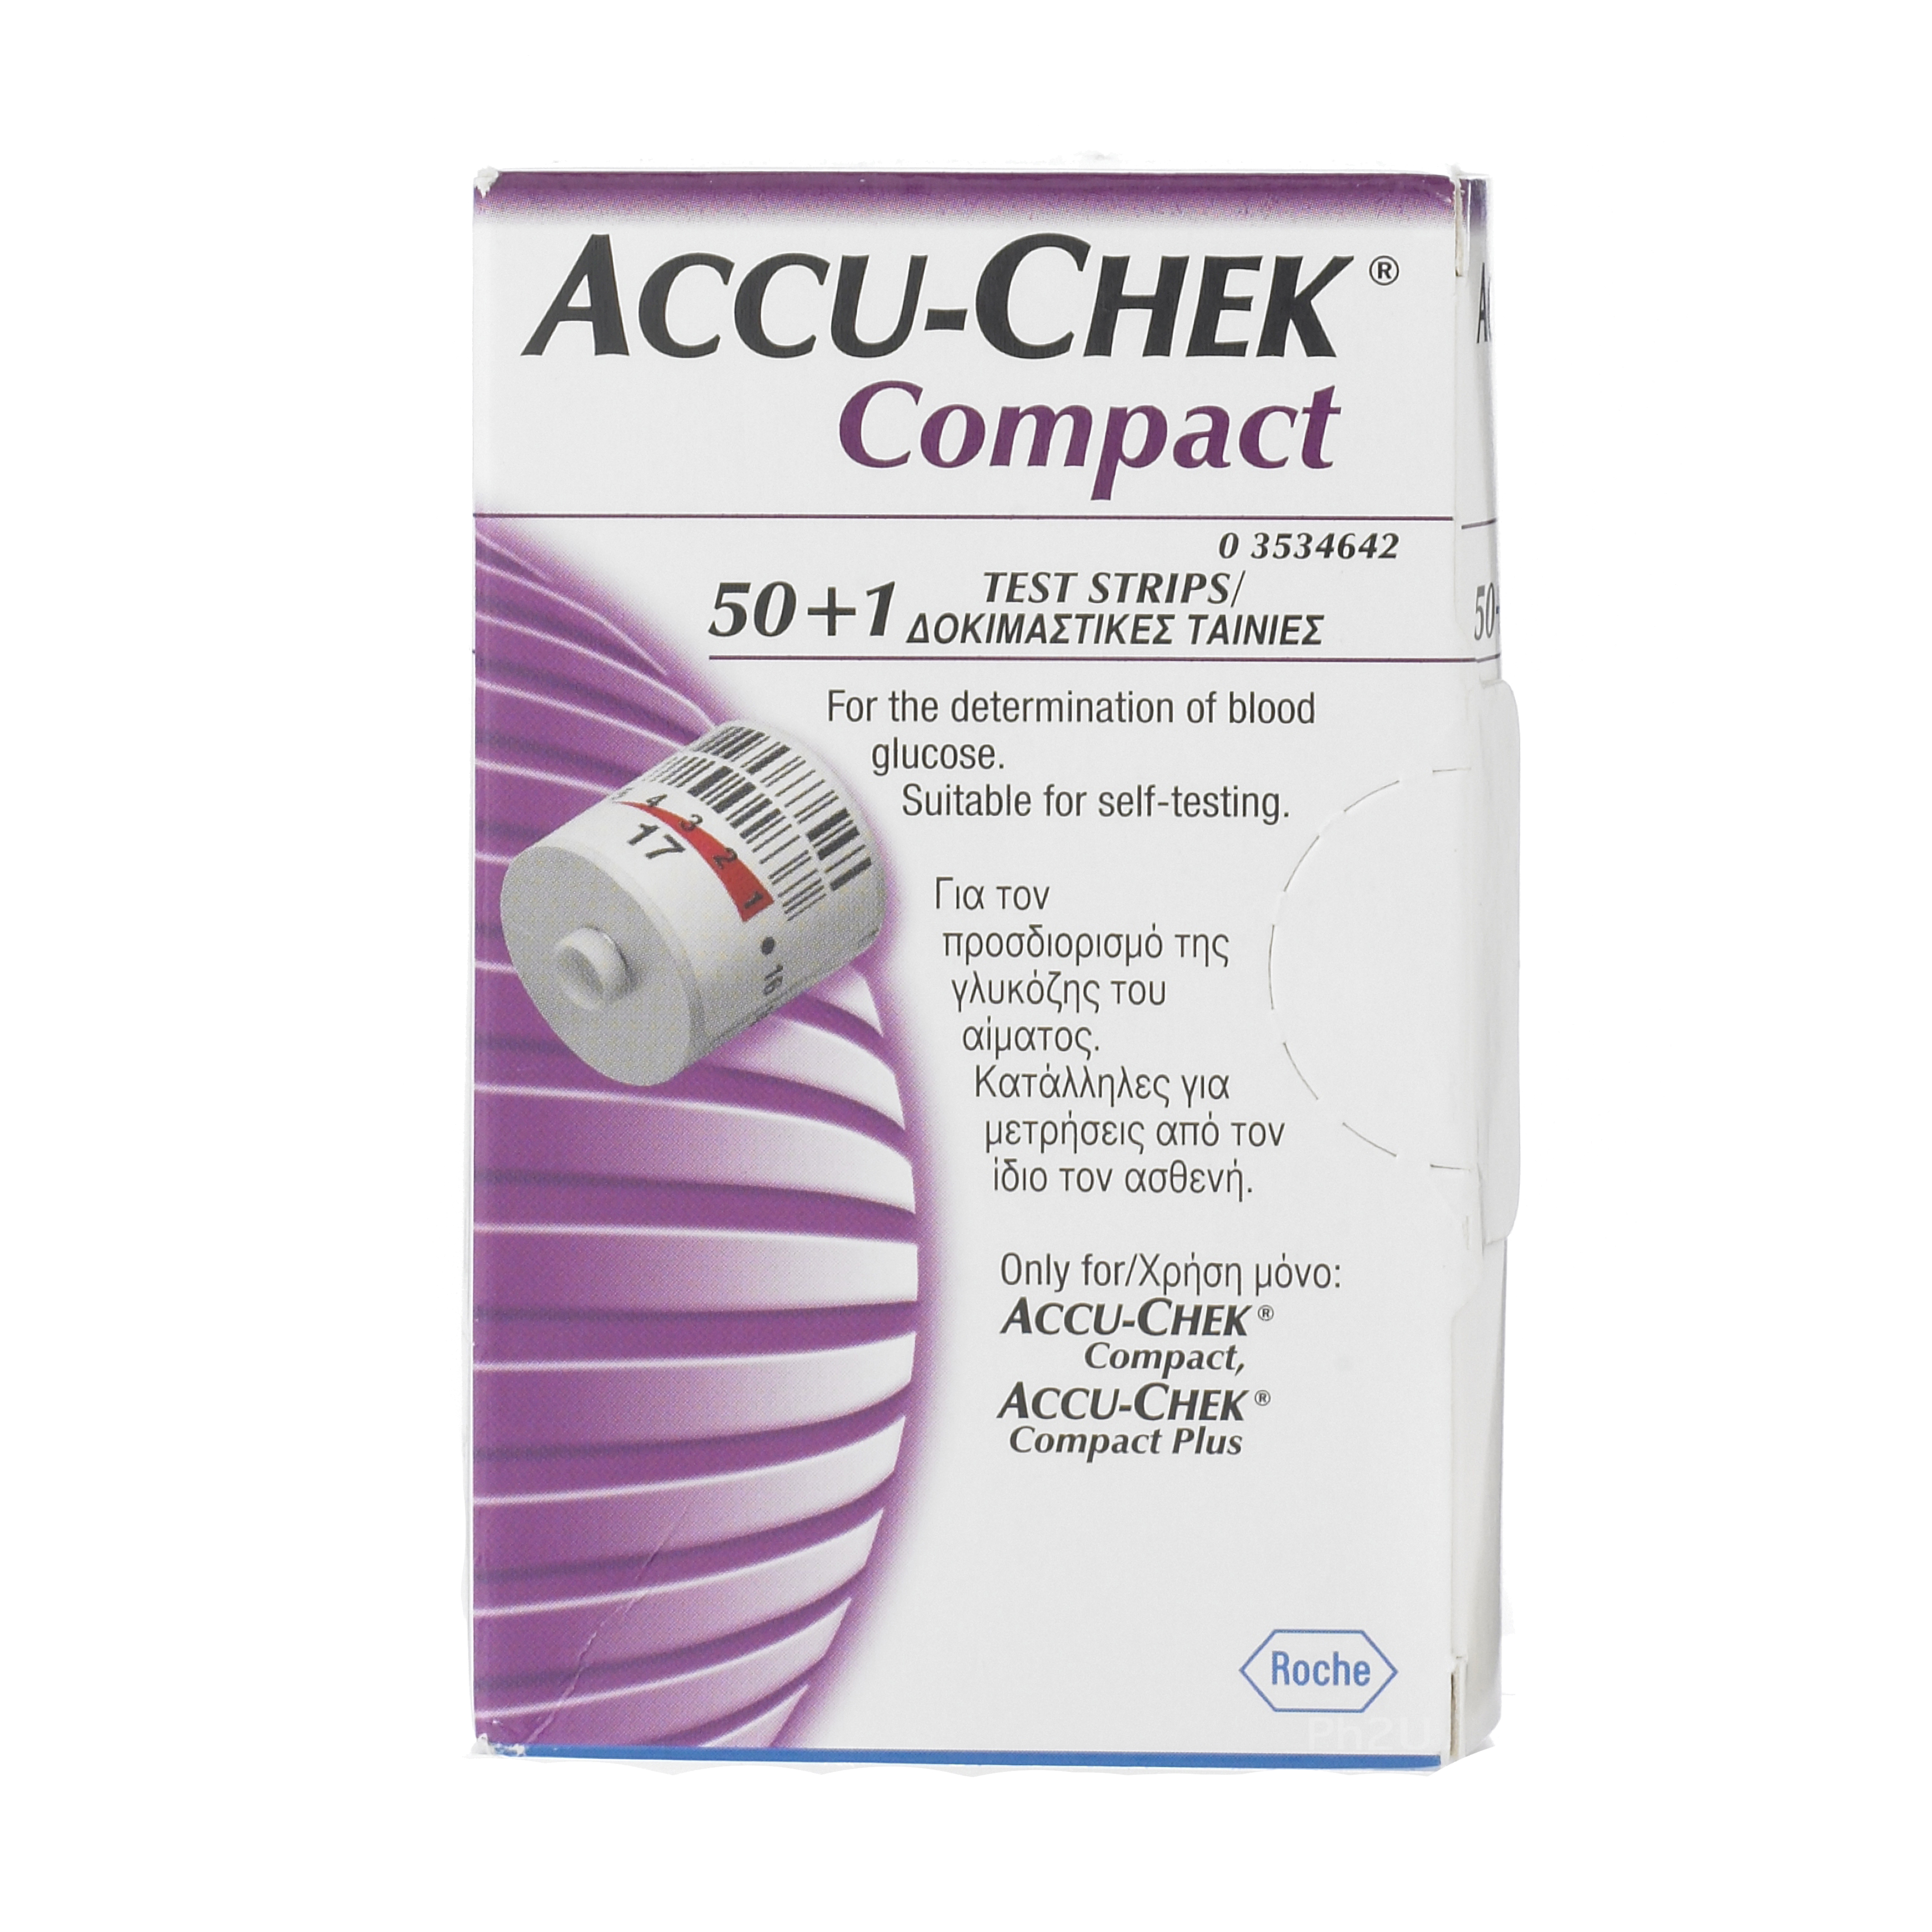 Accu-Chek compact test strips